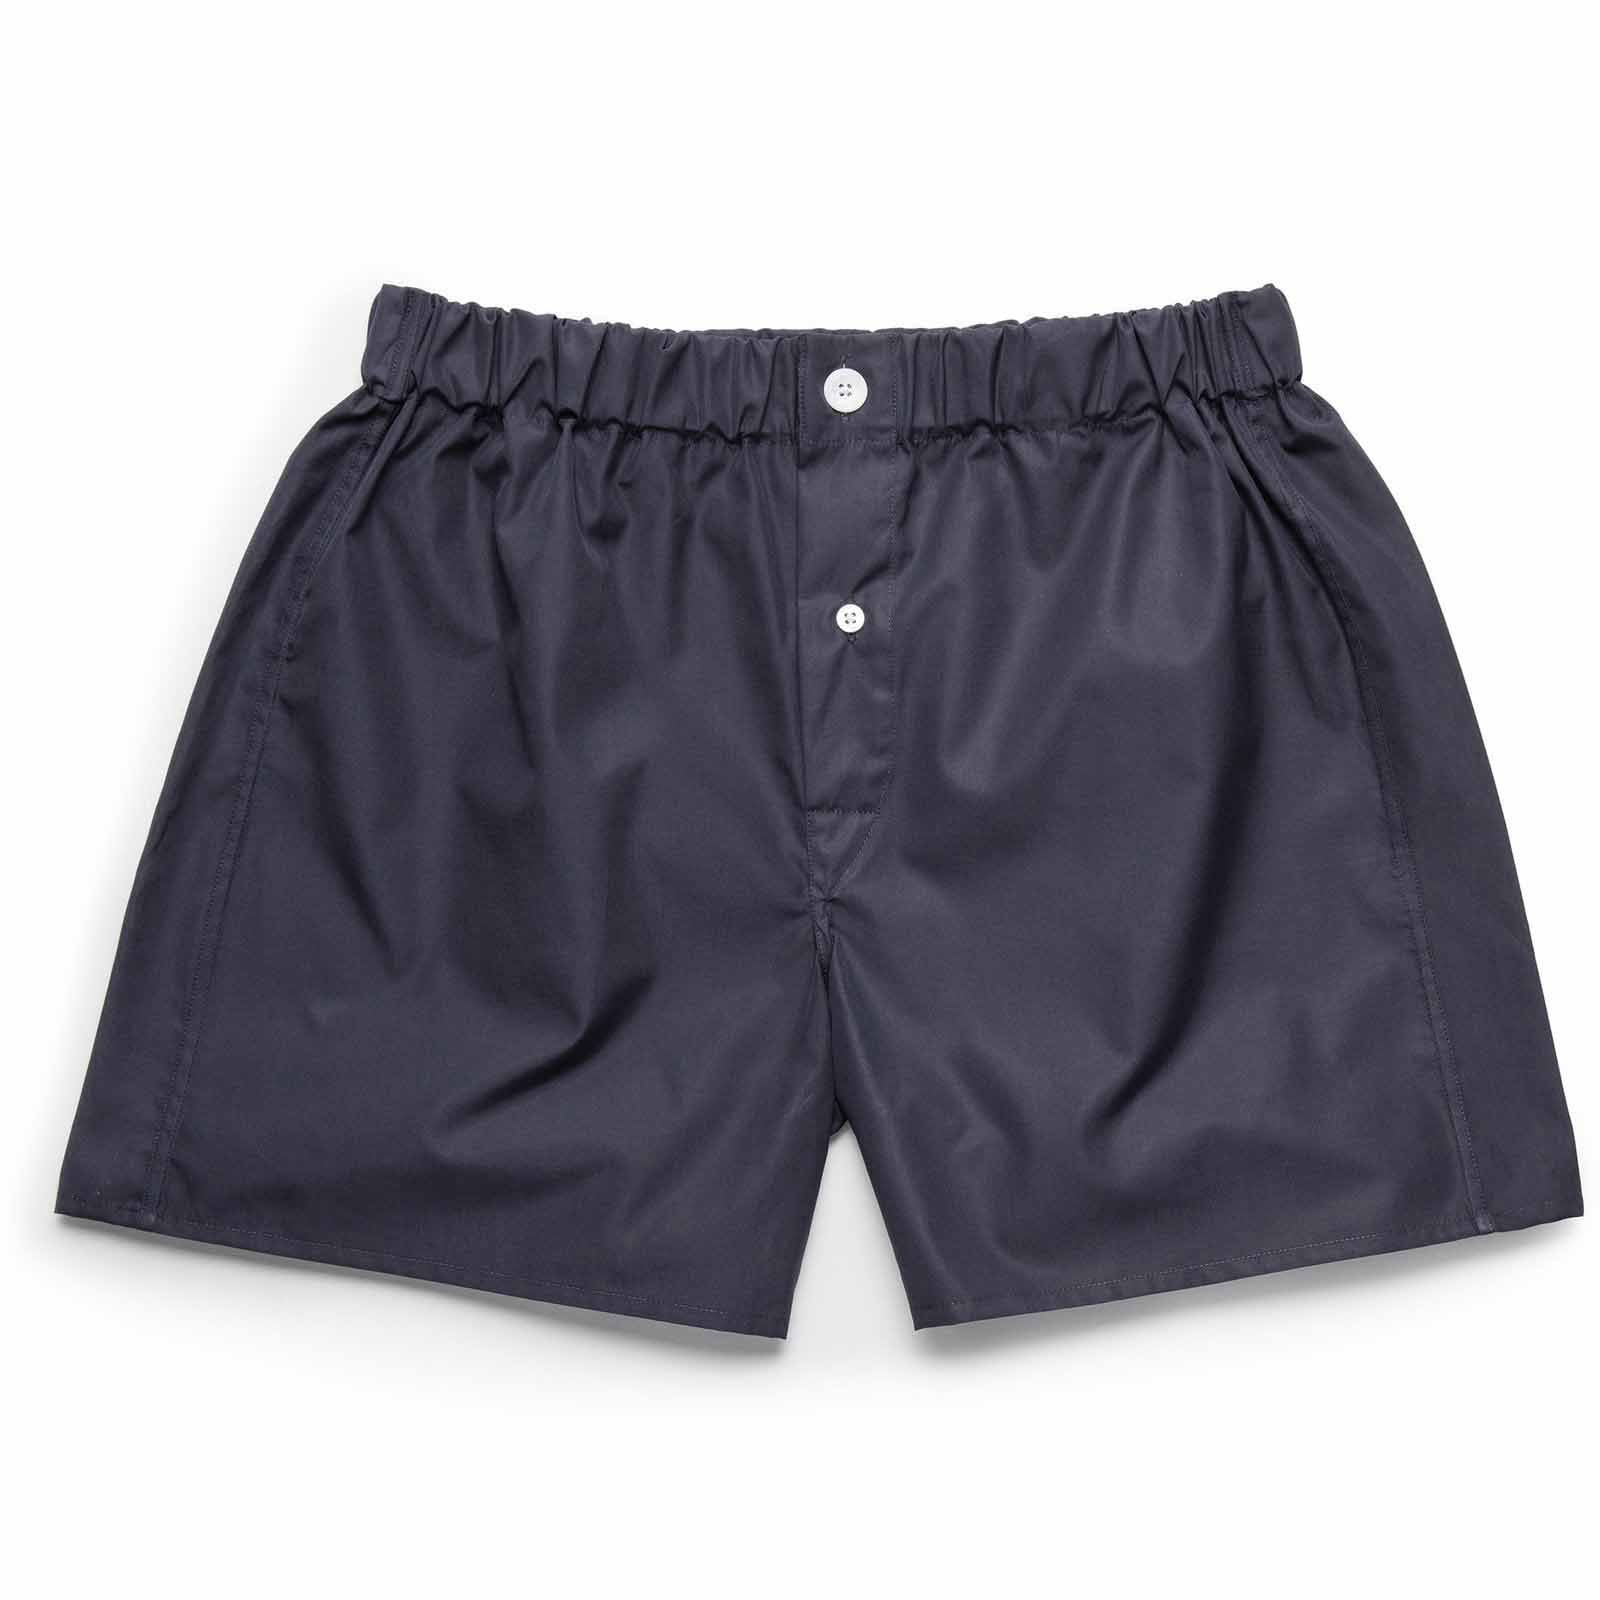 Black Superior Cotton Boxer Shorts - Slim Fit freeshipping - Emma Willis